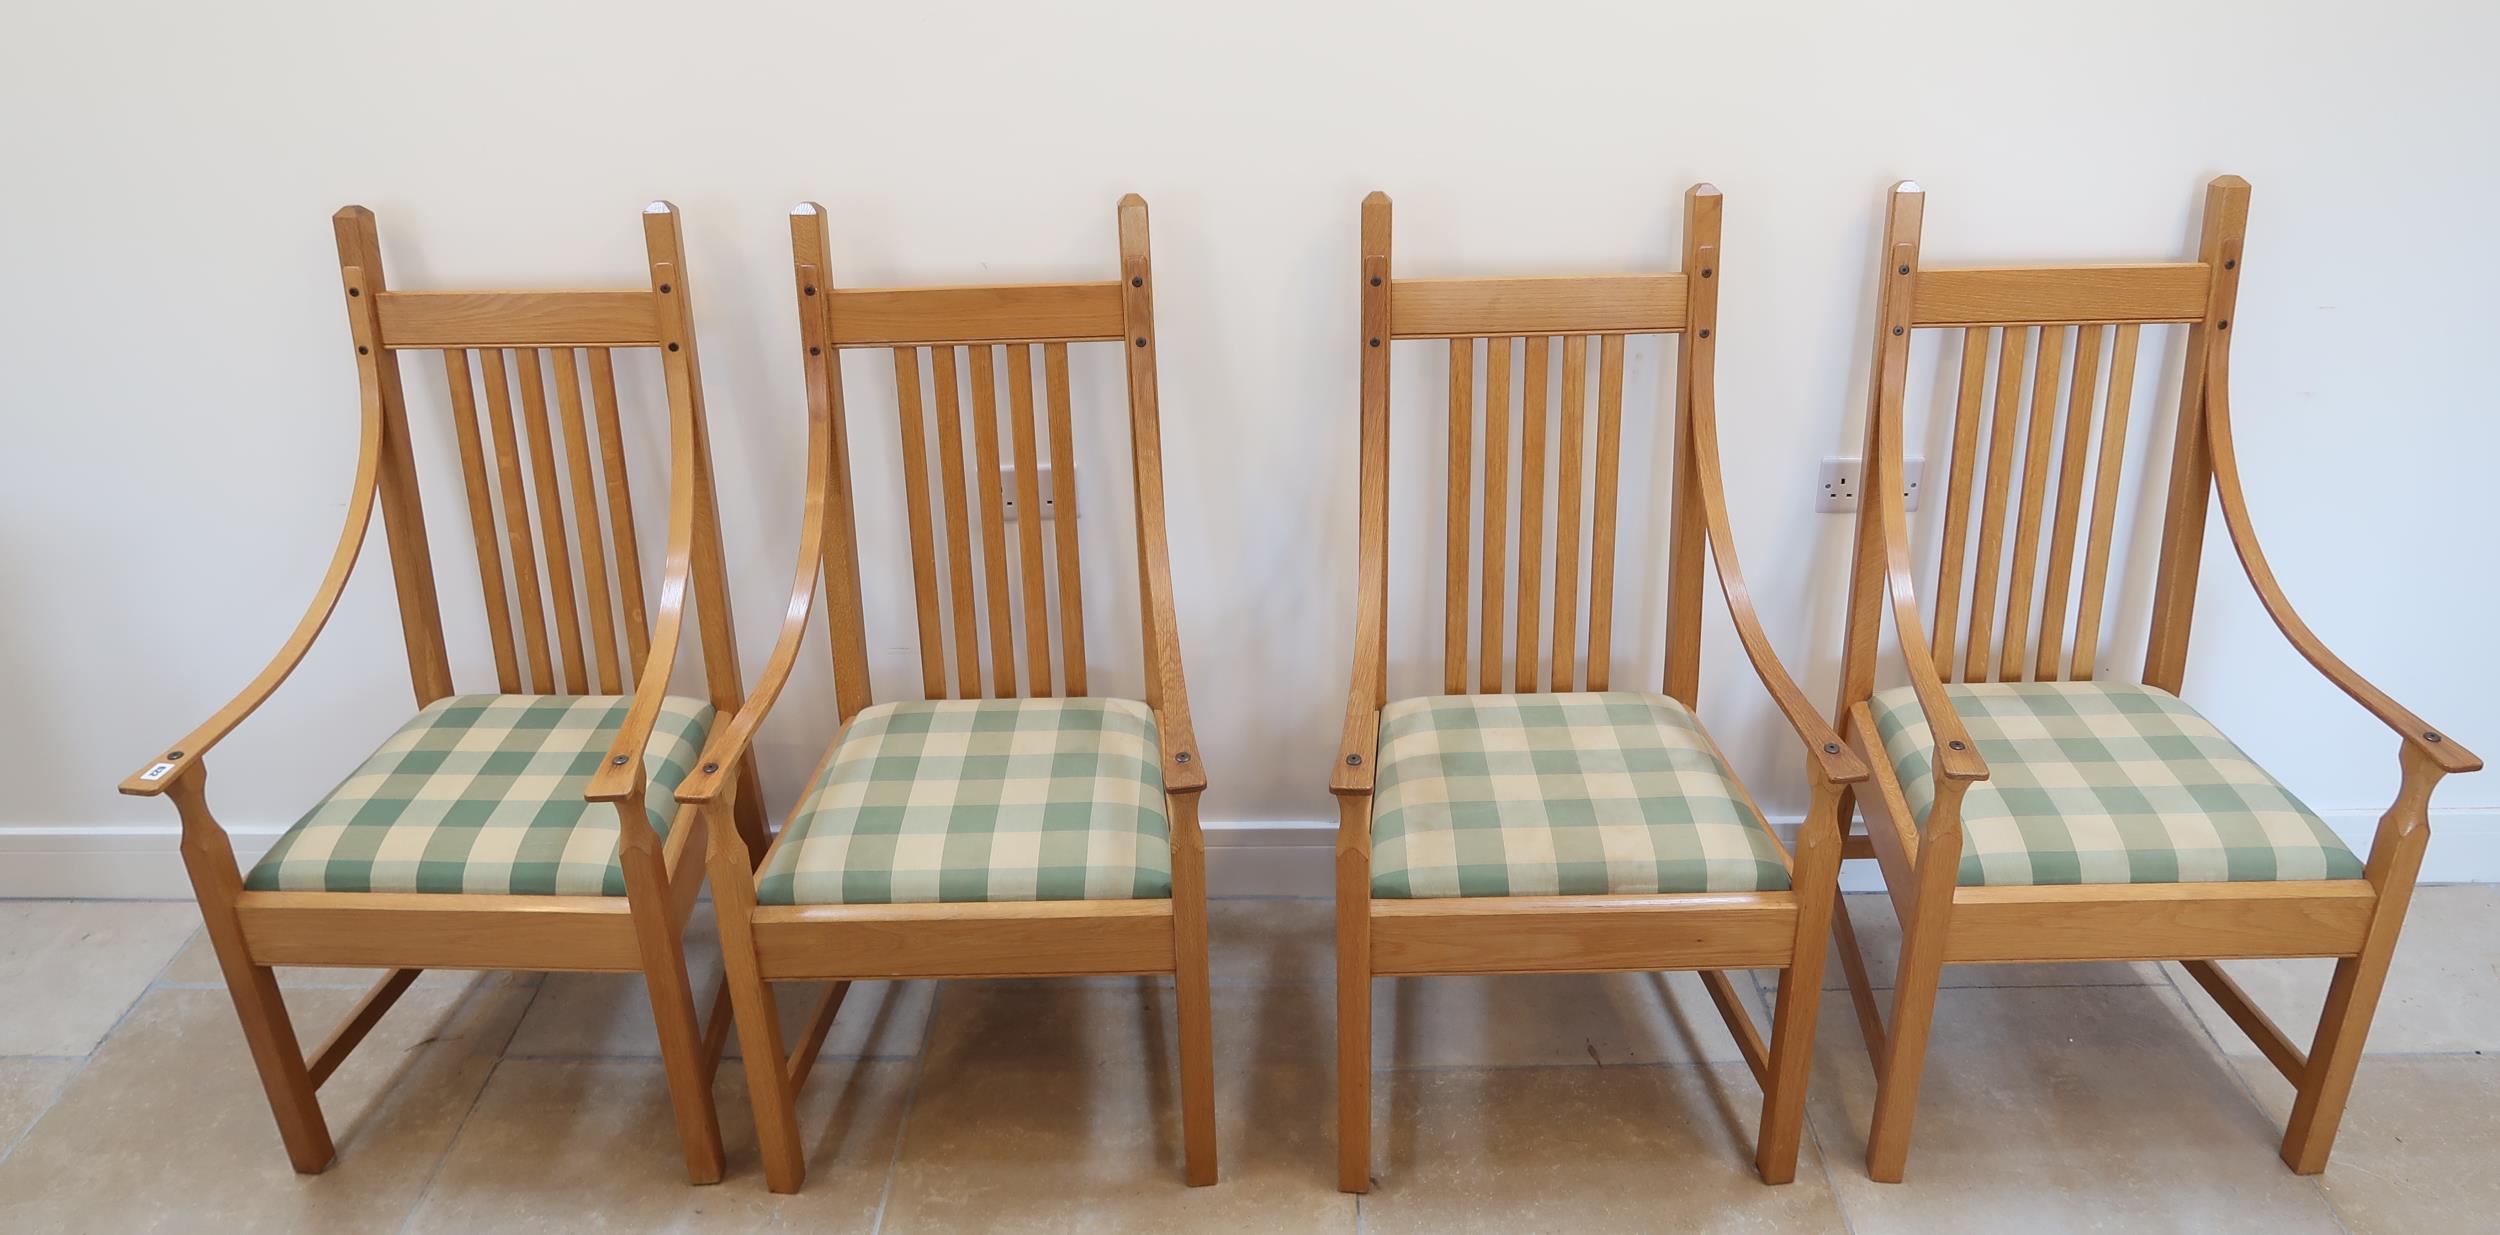 A set of four oak chairs by Luke Hughes